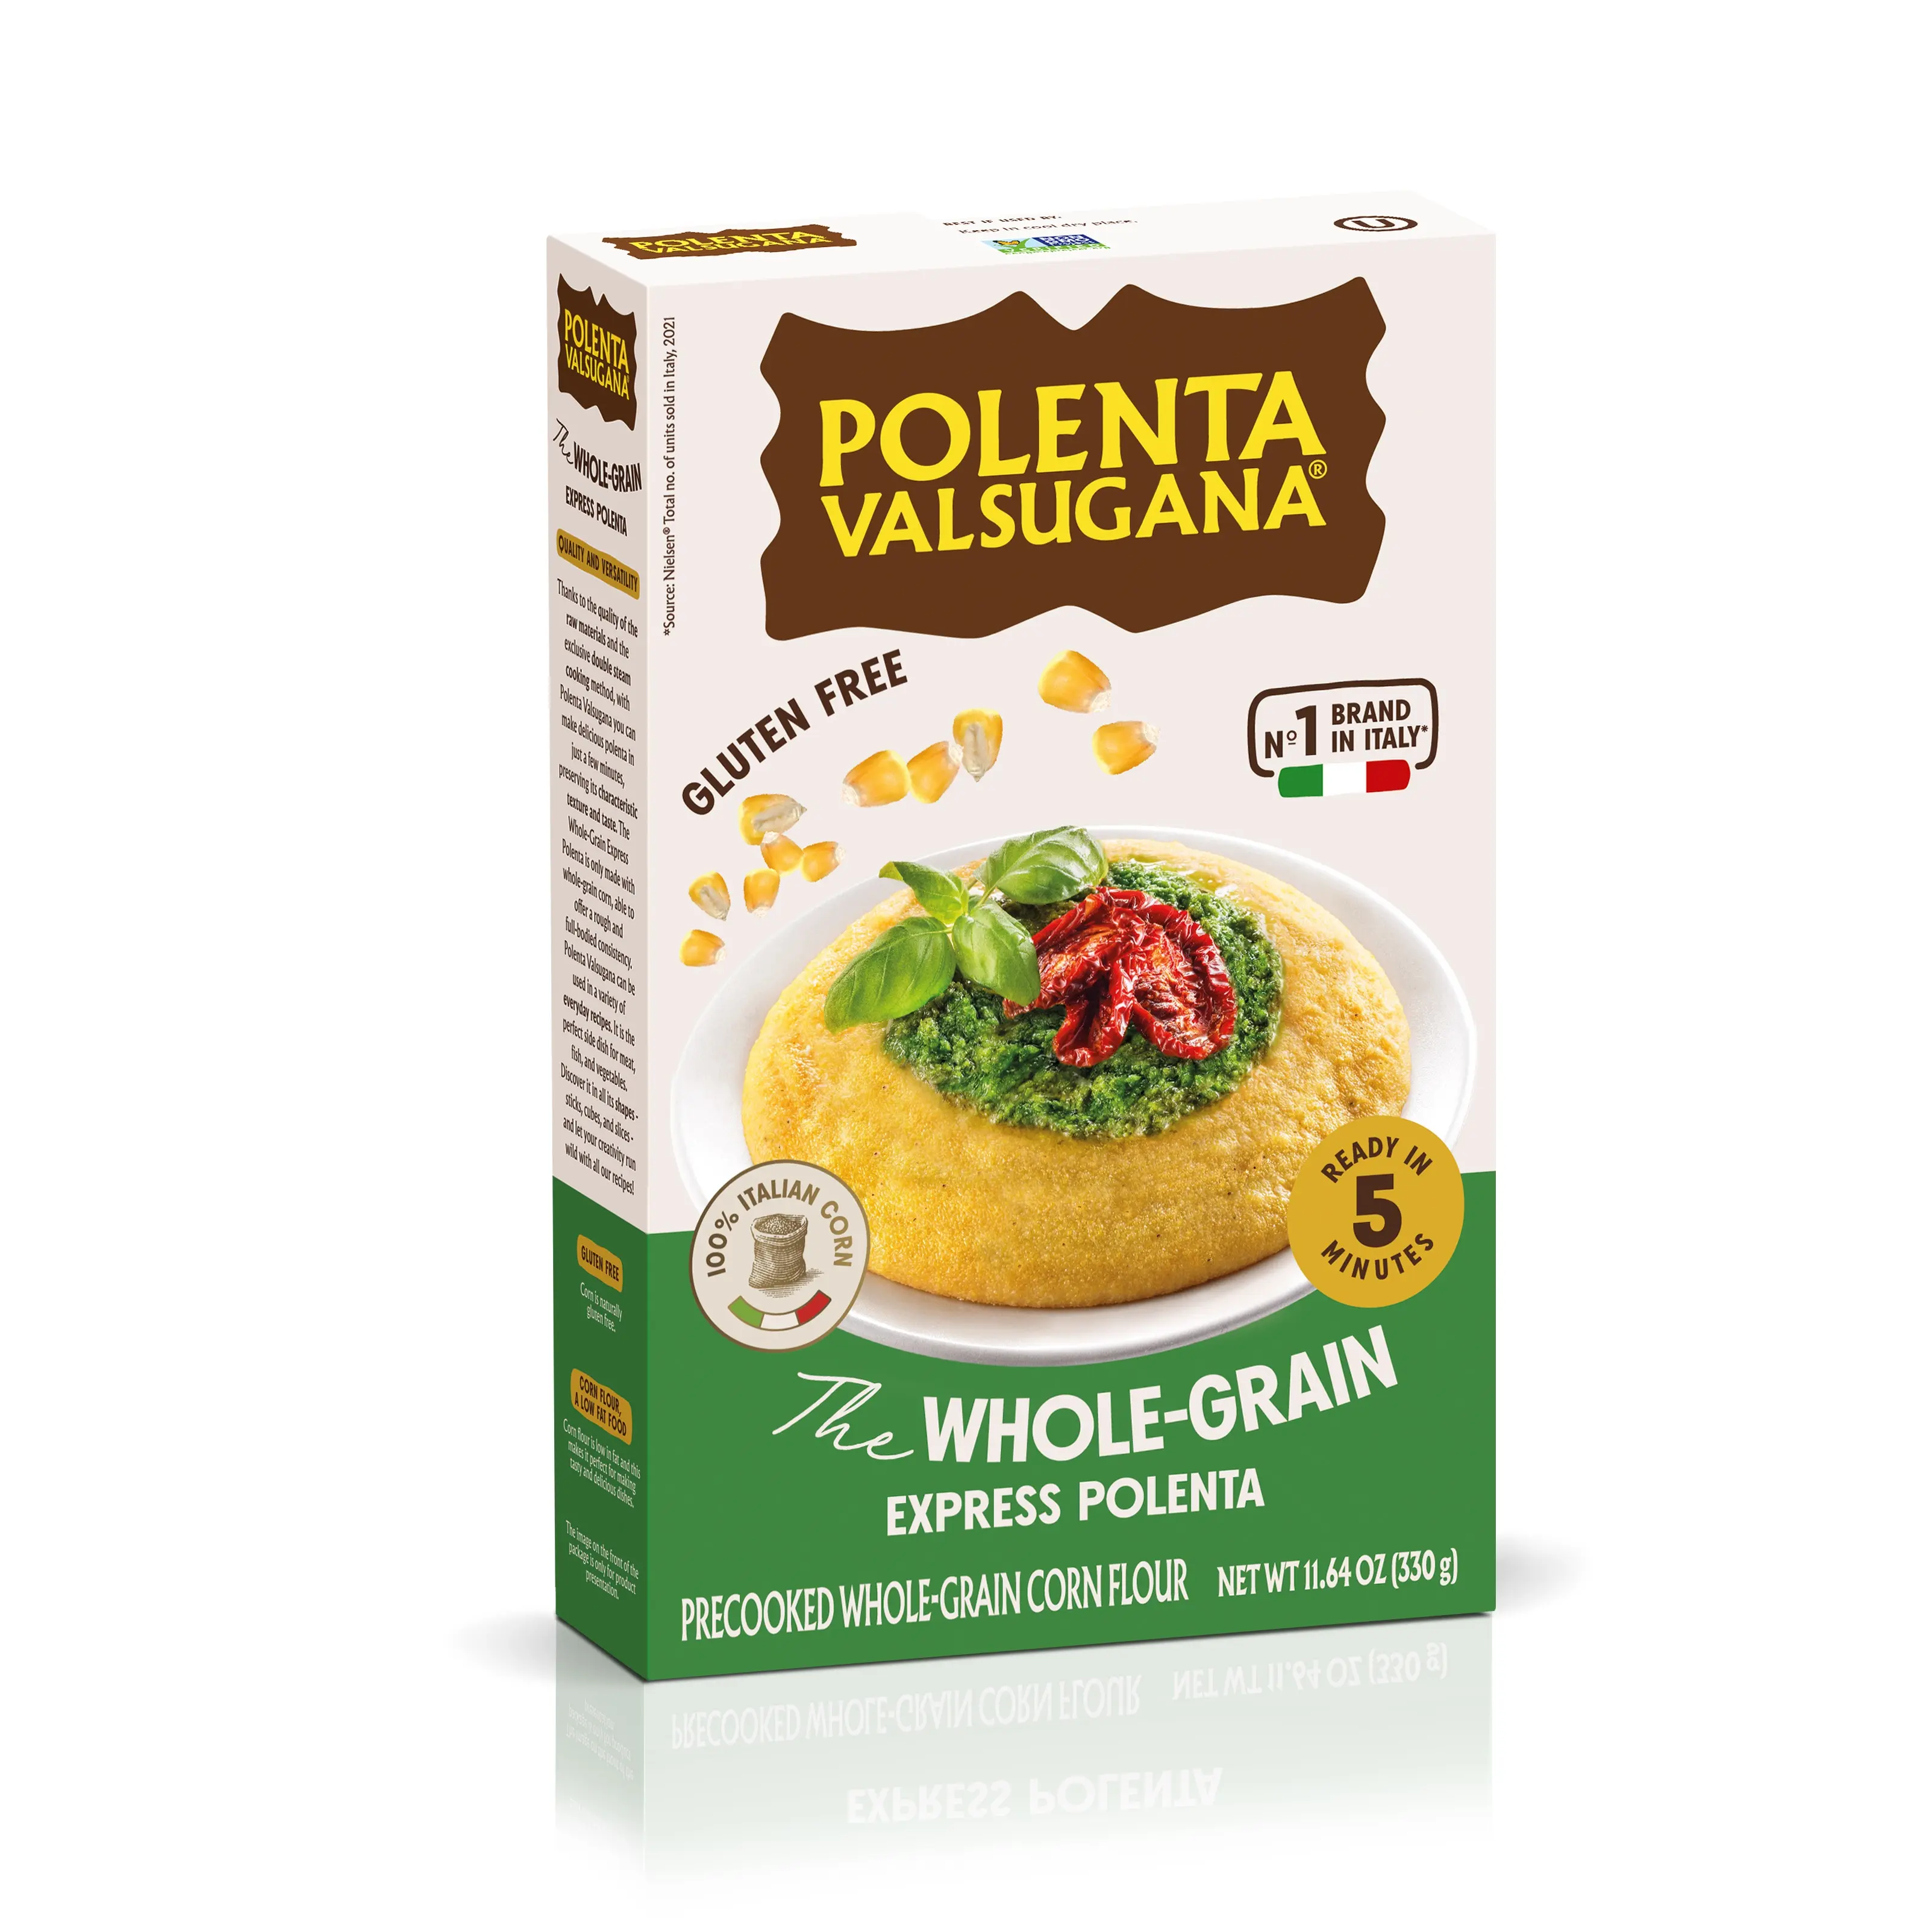 High Quality Italian Polenta Valsugana Express Whole Grain Corn Flour Gluten Free Yellow Corn Flour 1 box 330 g for cooking